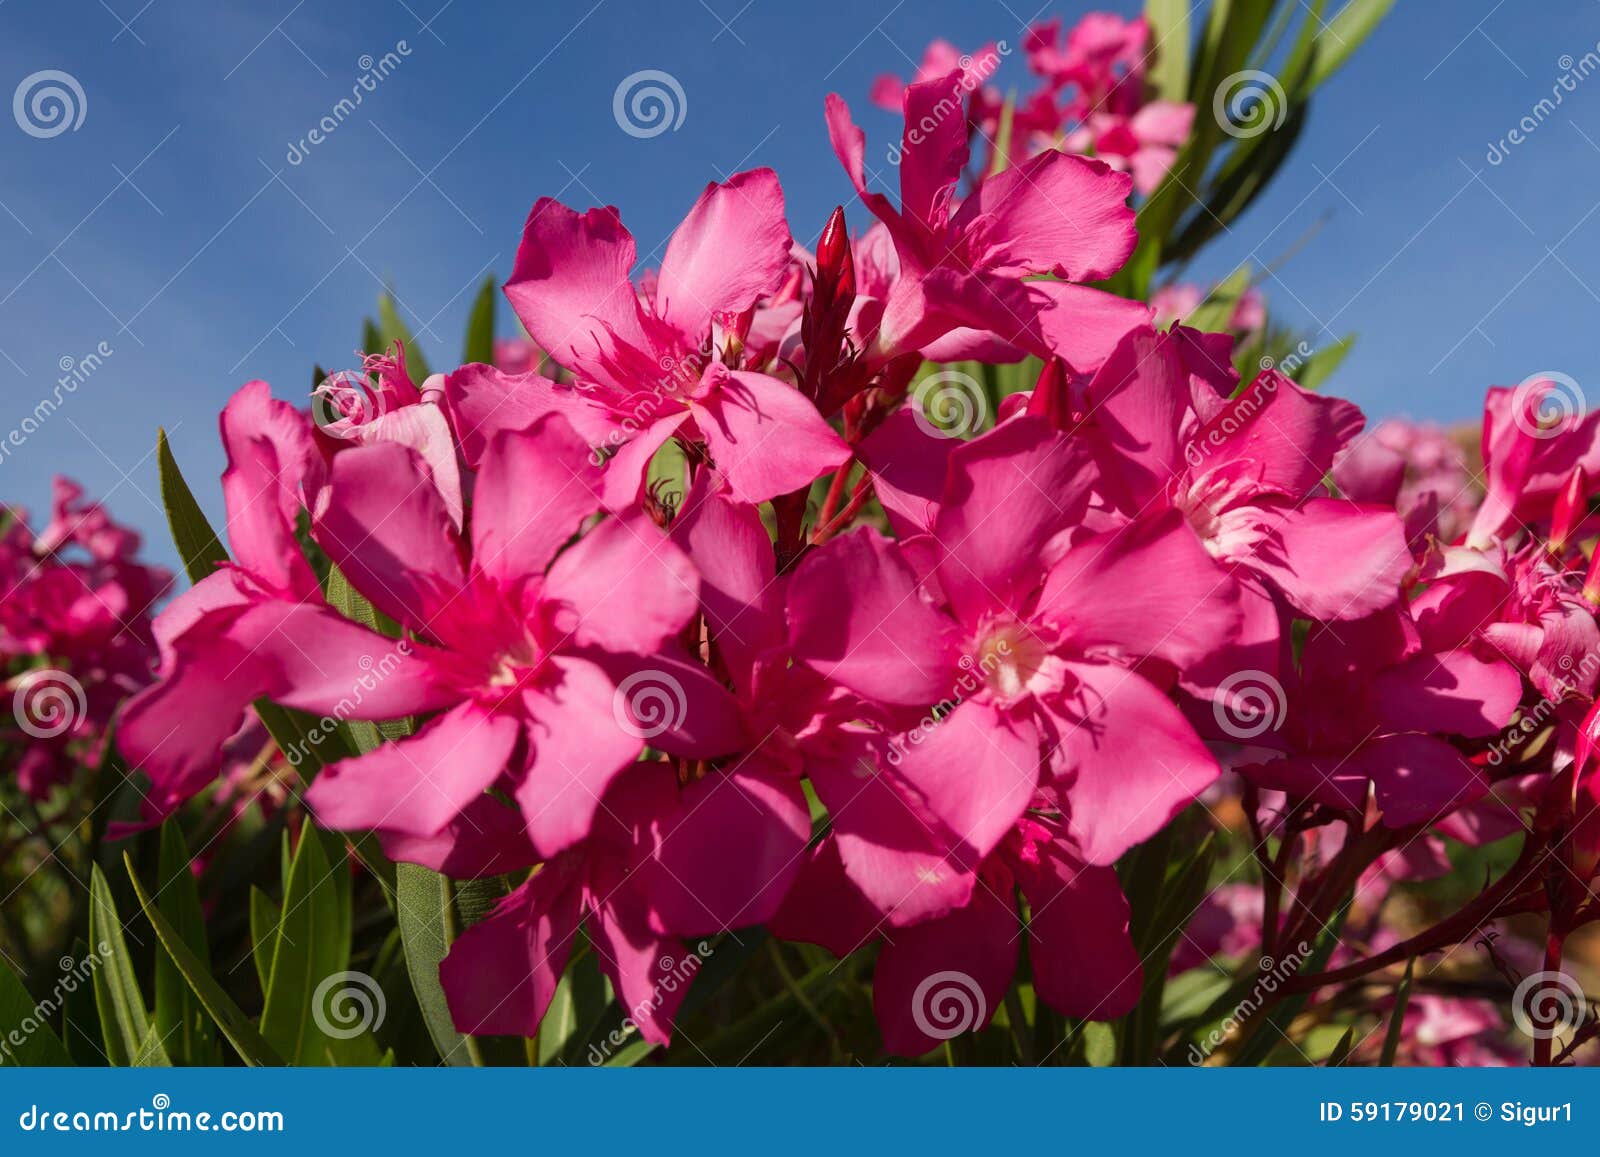 azalea flowers sunny